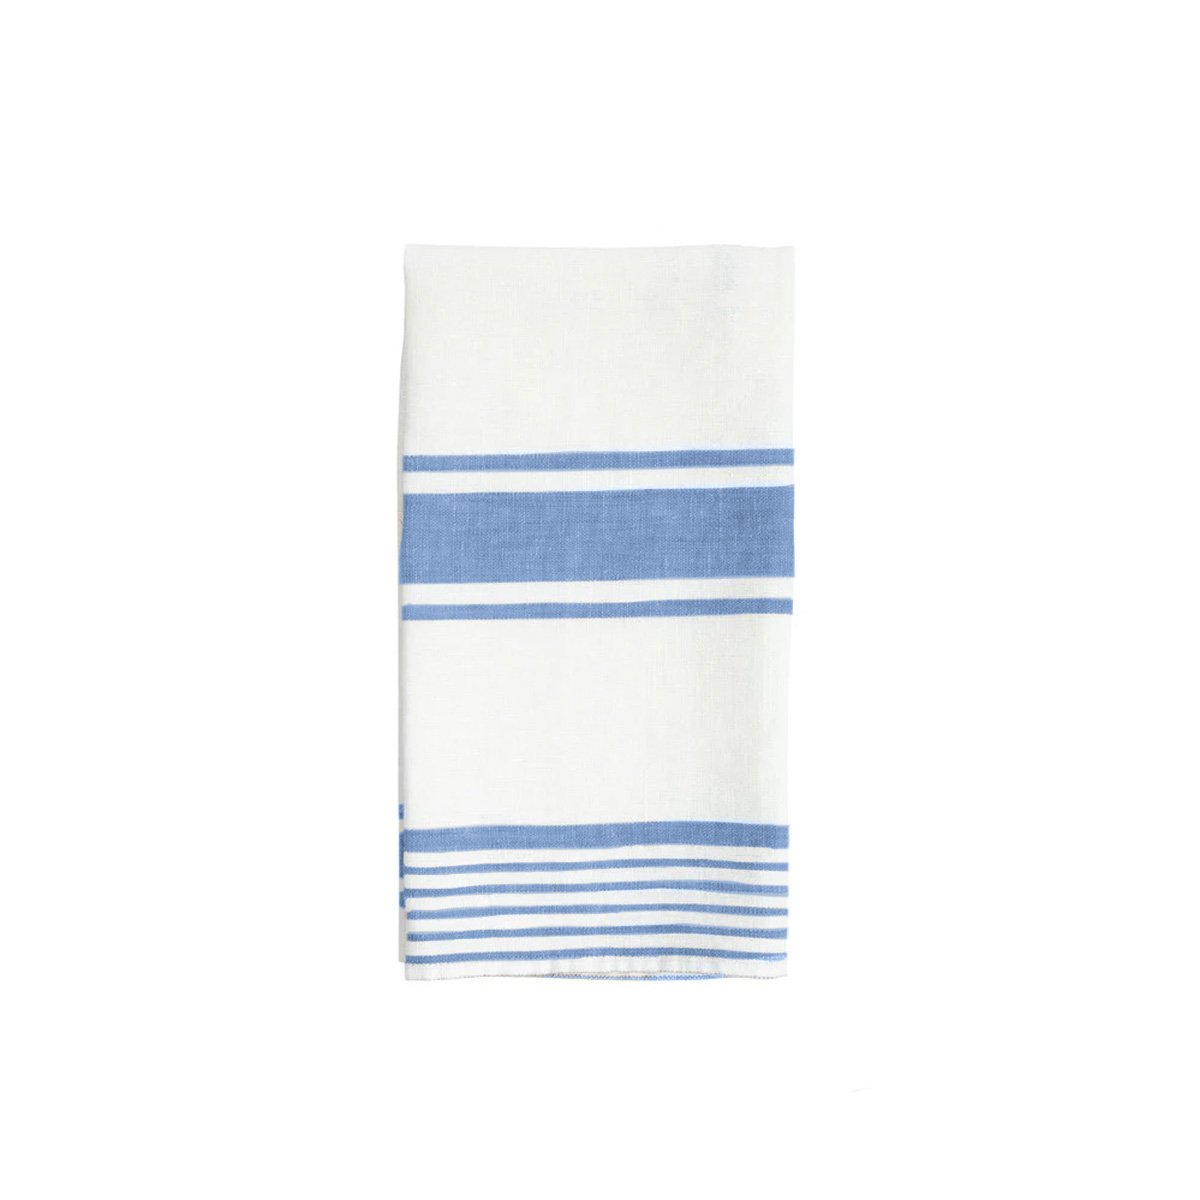 MH Tea Towel - Blue French Stripe